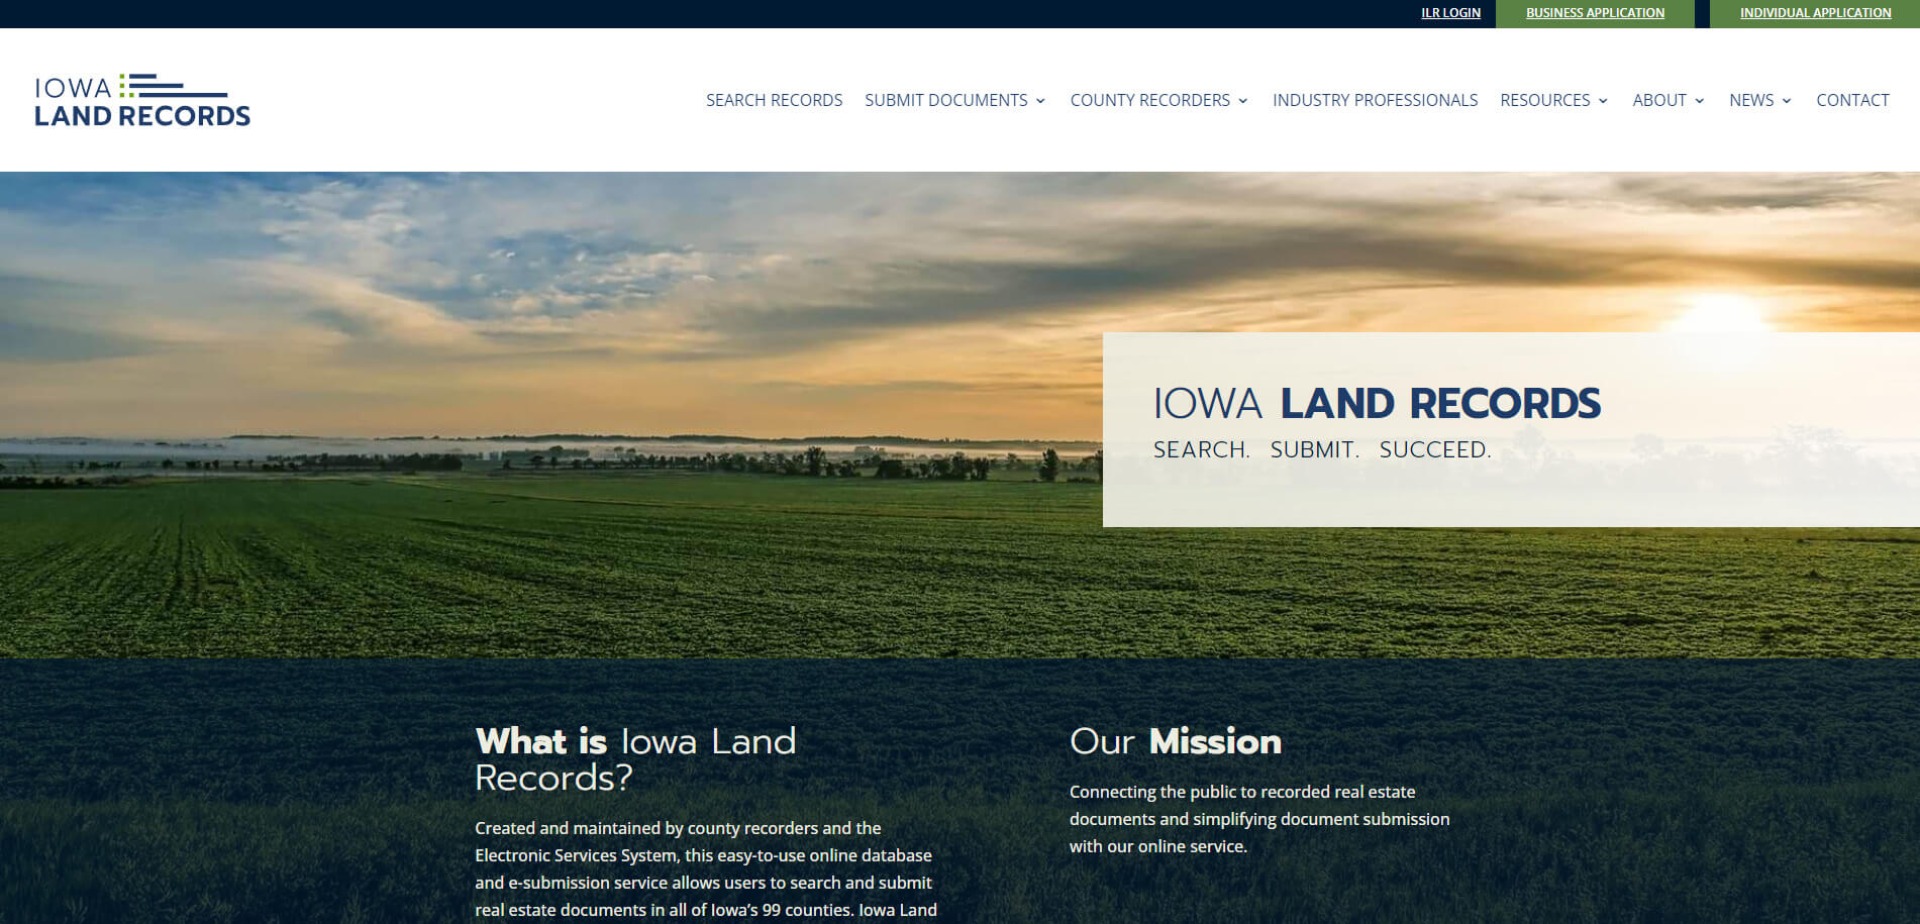 Iowa Land Records website homepage